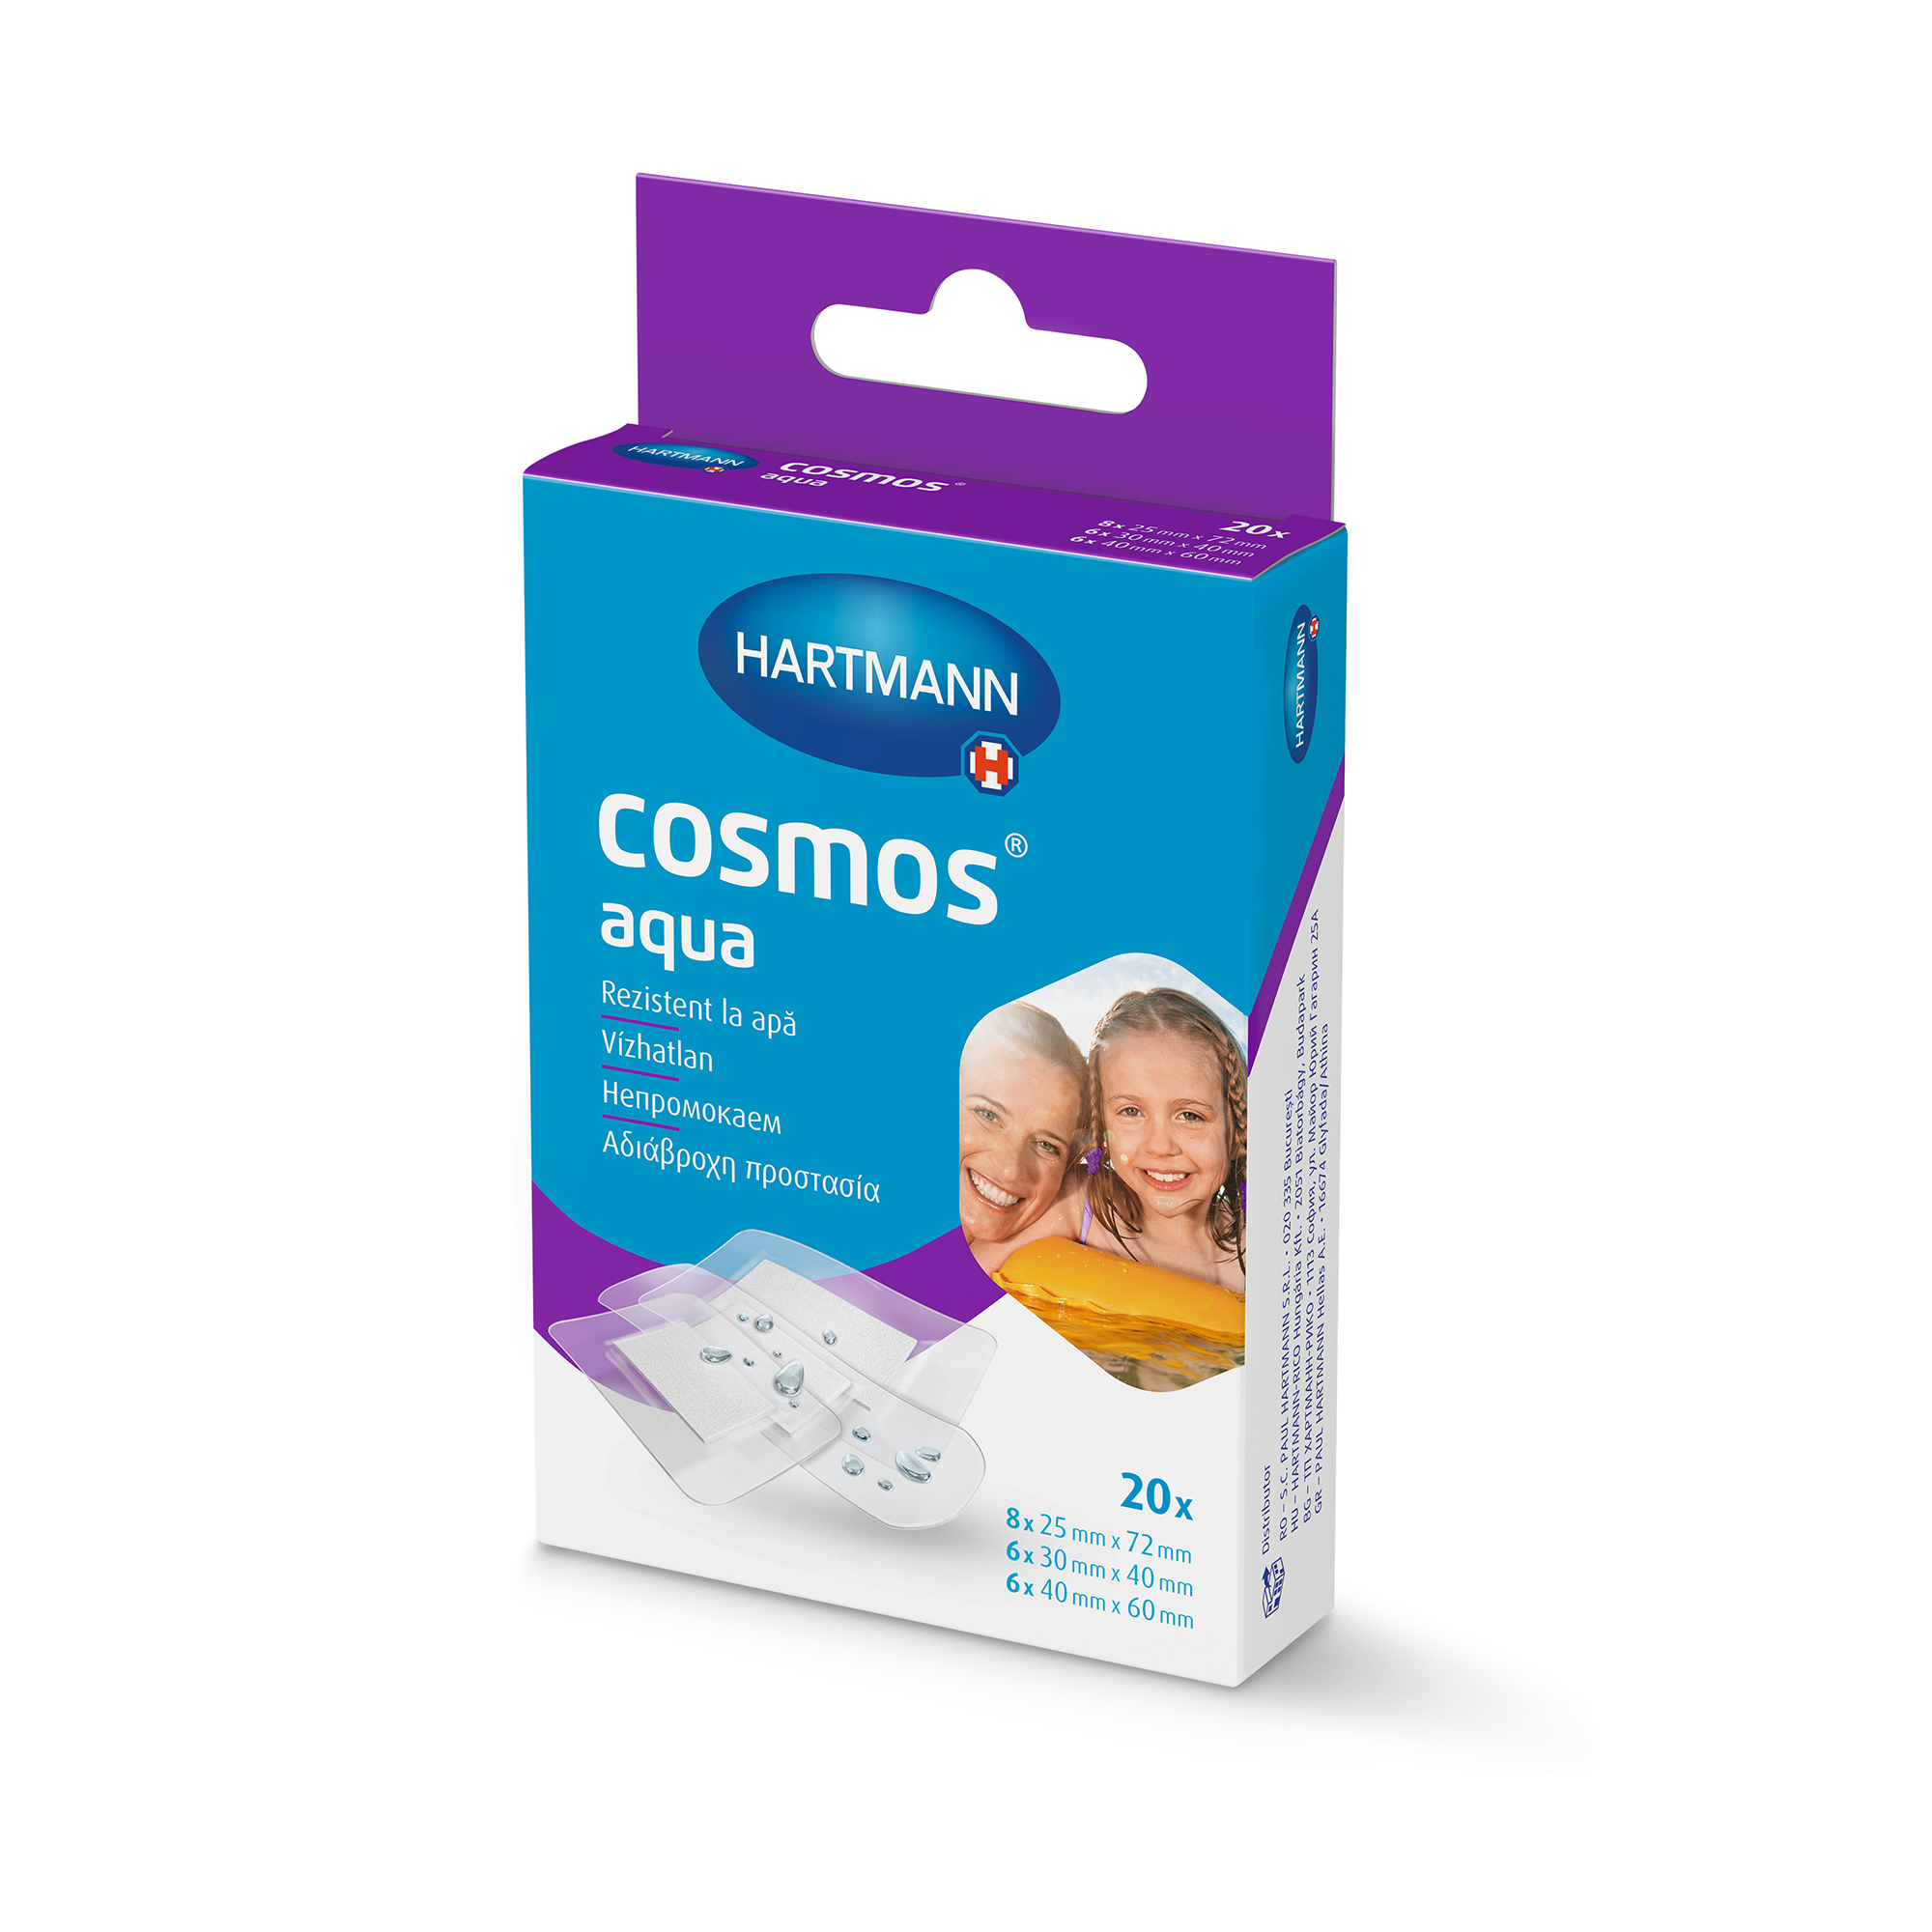 Hartmann Cosmos® aqua in 3 different sizes, in a folding box